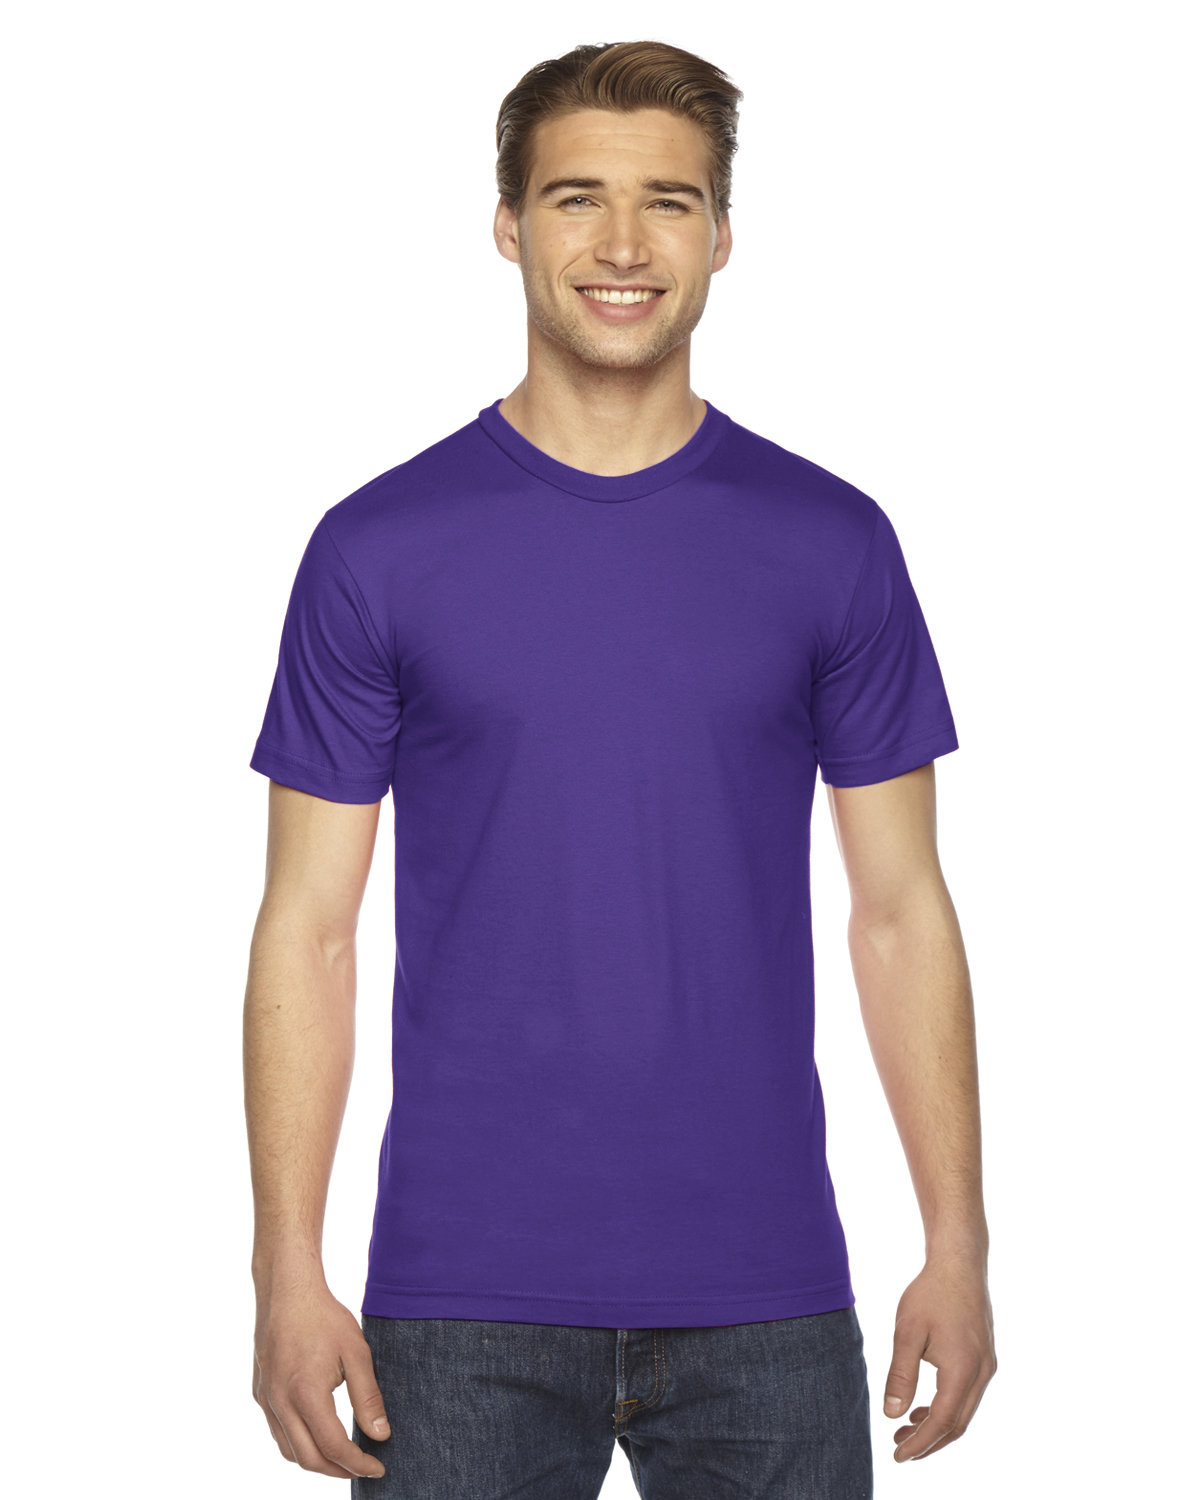 American Apparel Unisex Fine Jersey Short-Sleeve T-Shirt PURPLE 